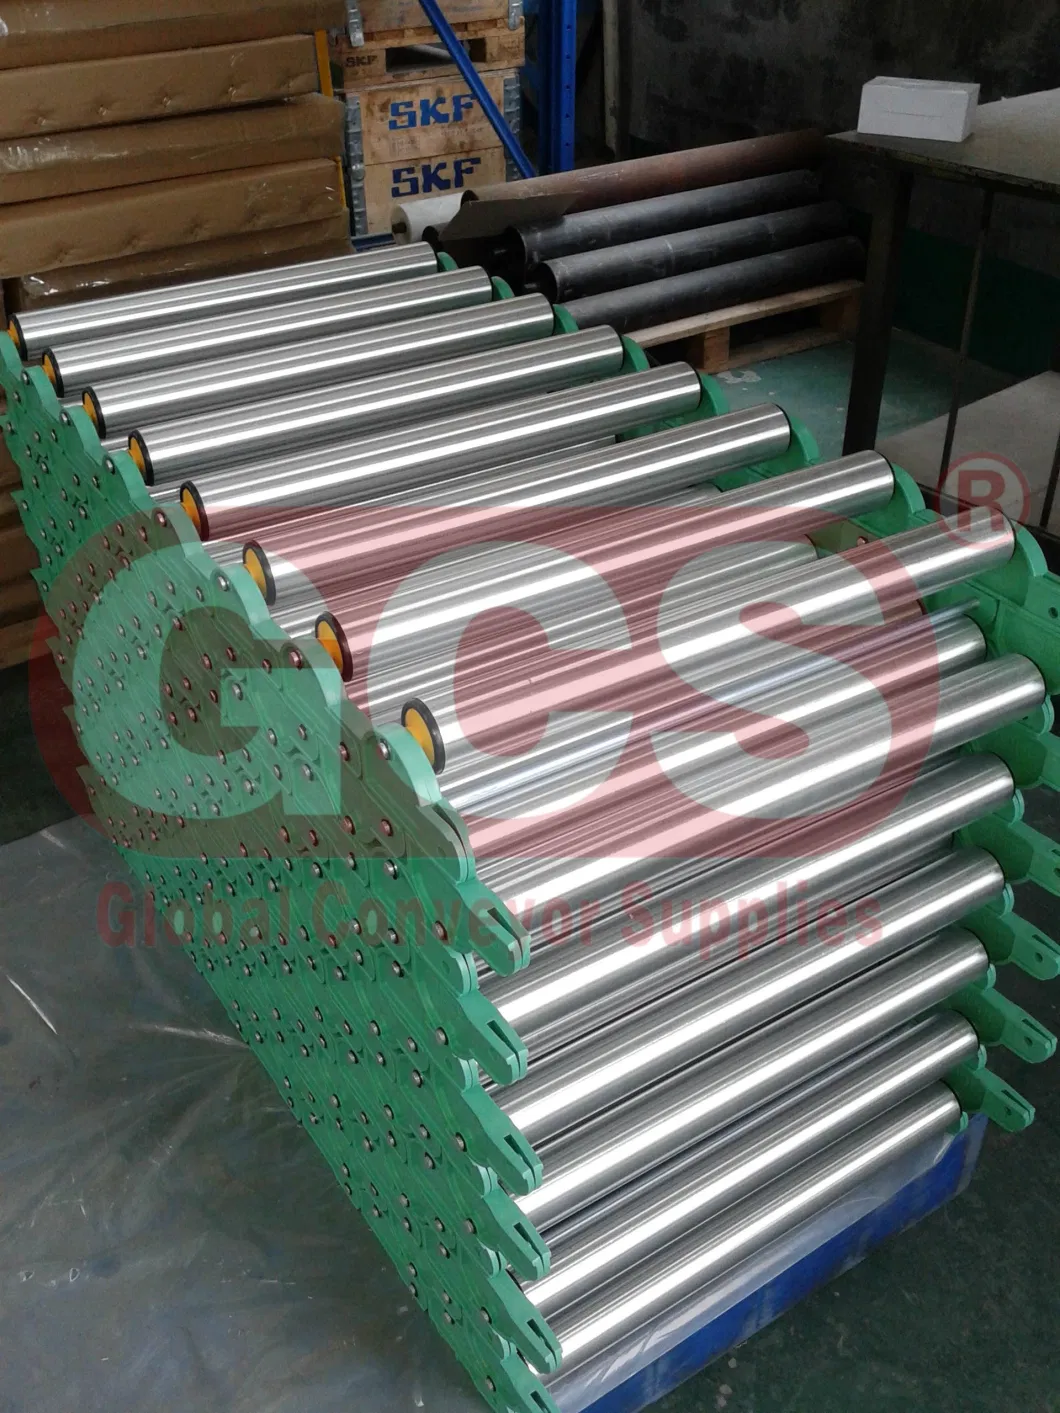 Warehouse Conveyor Roller, Container Truck Conveyor Ladder, Plastic Roller